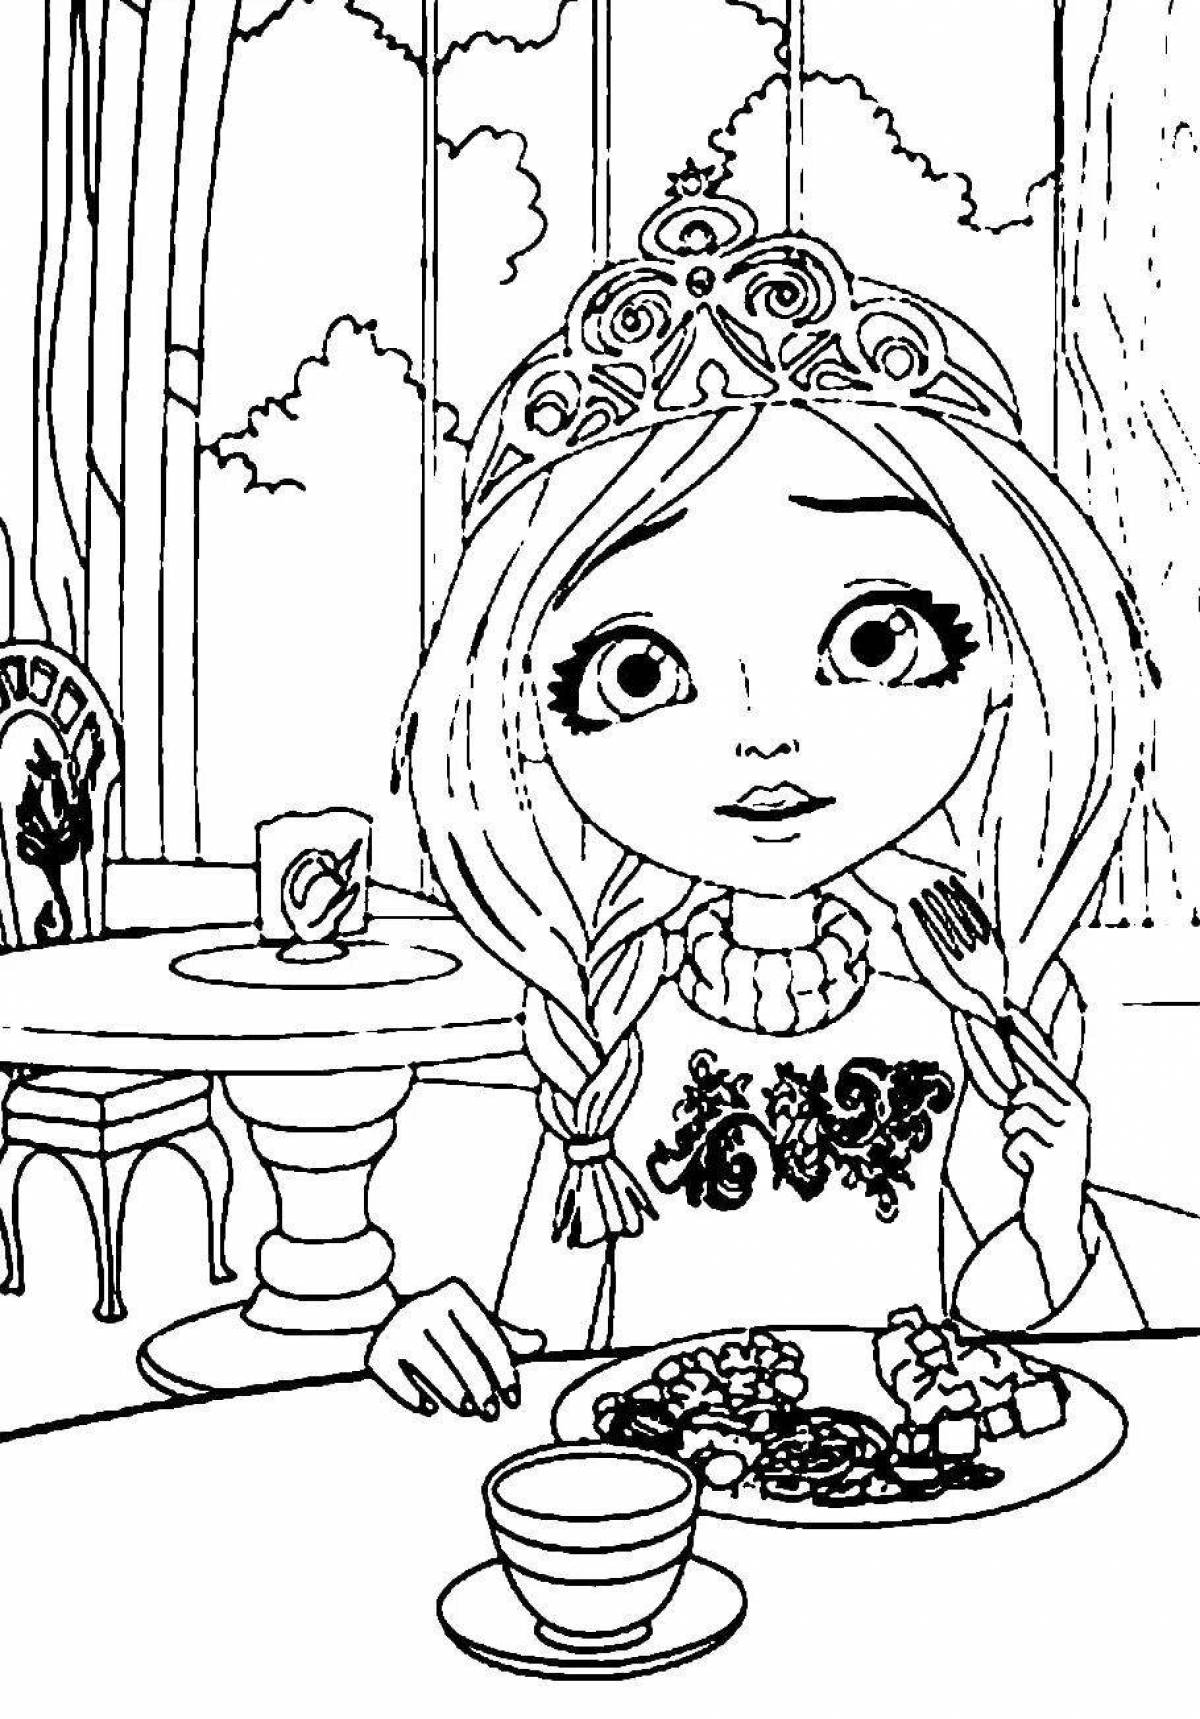 Cute mischievous princess coloring book